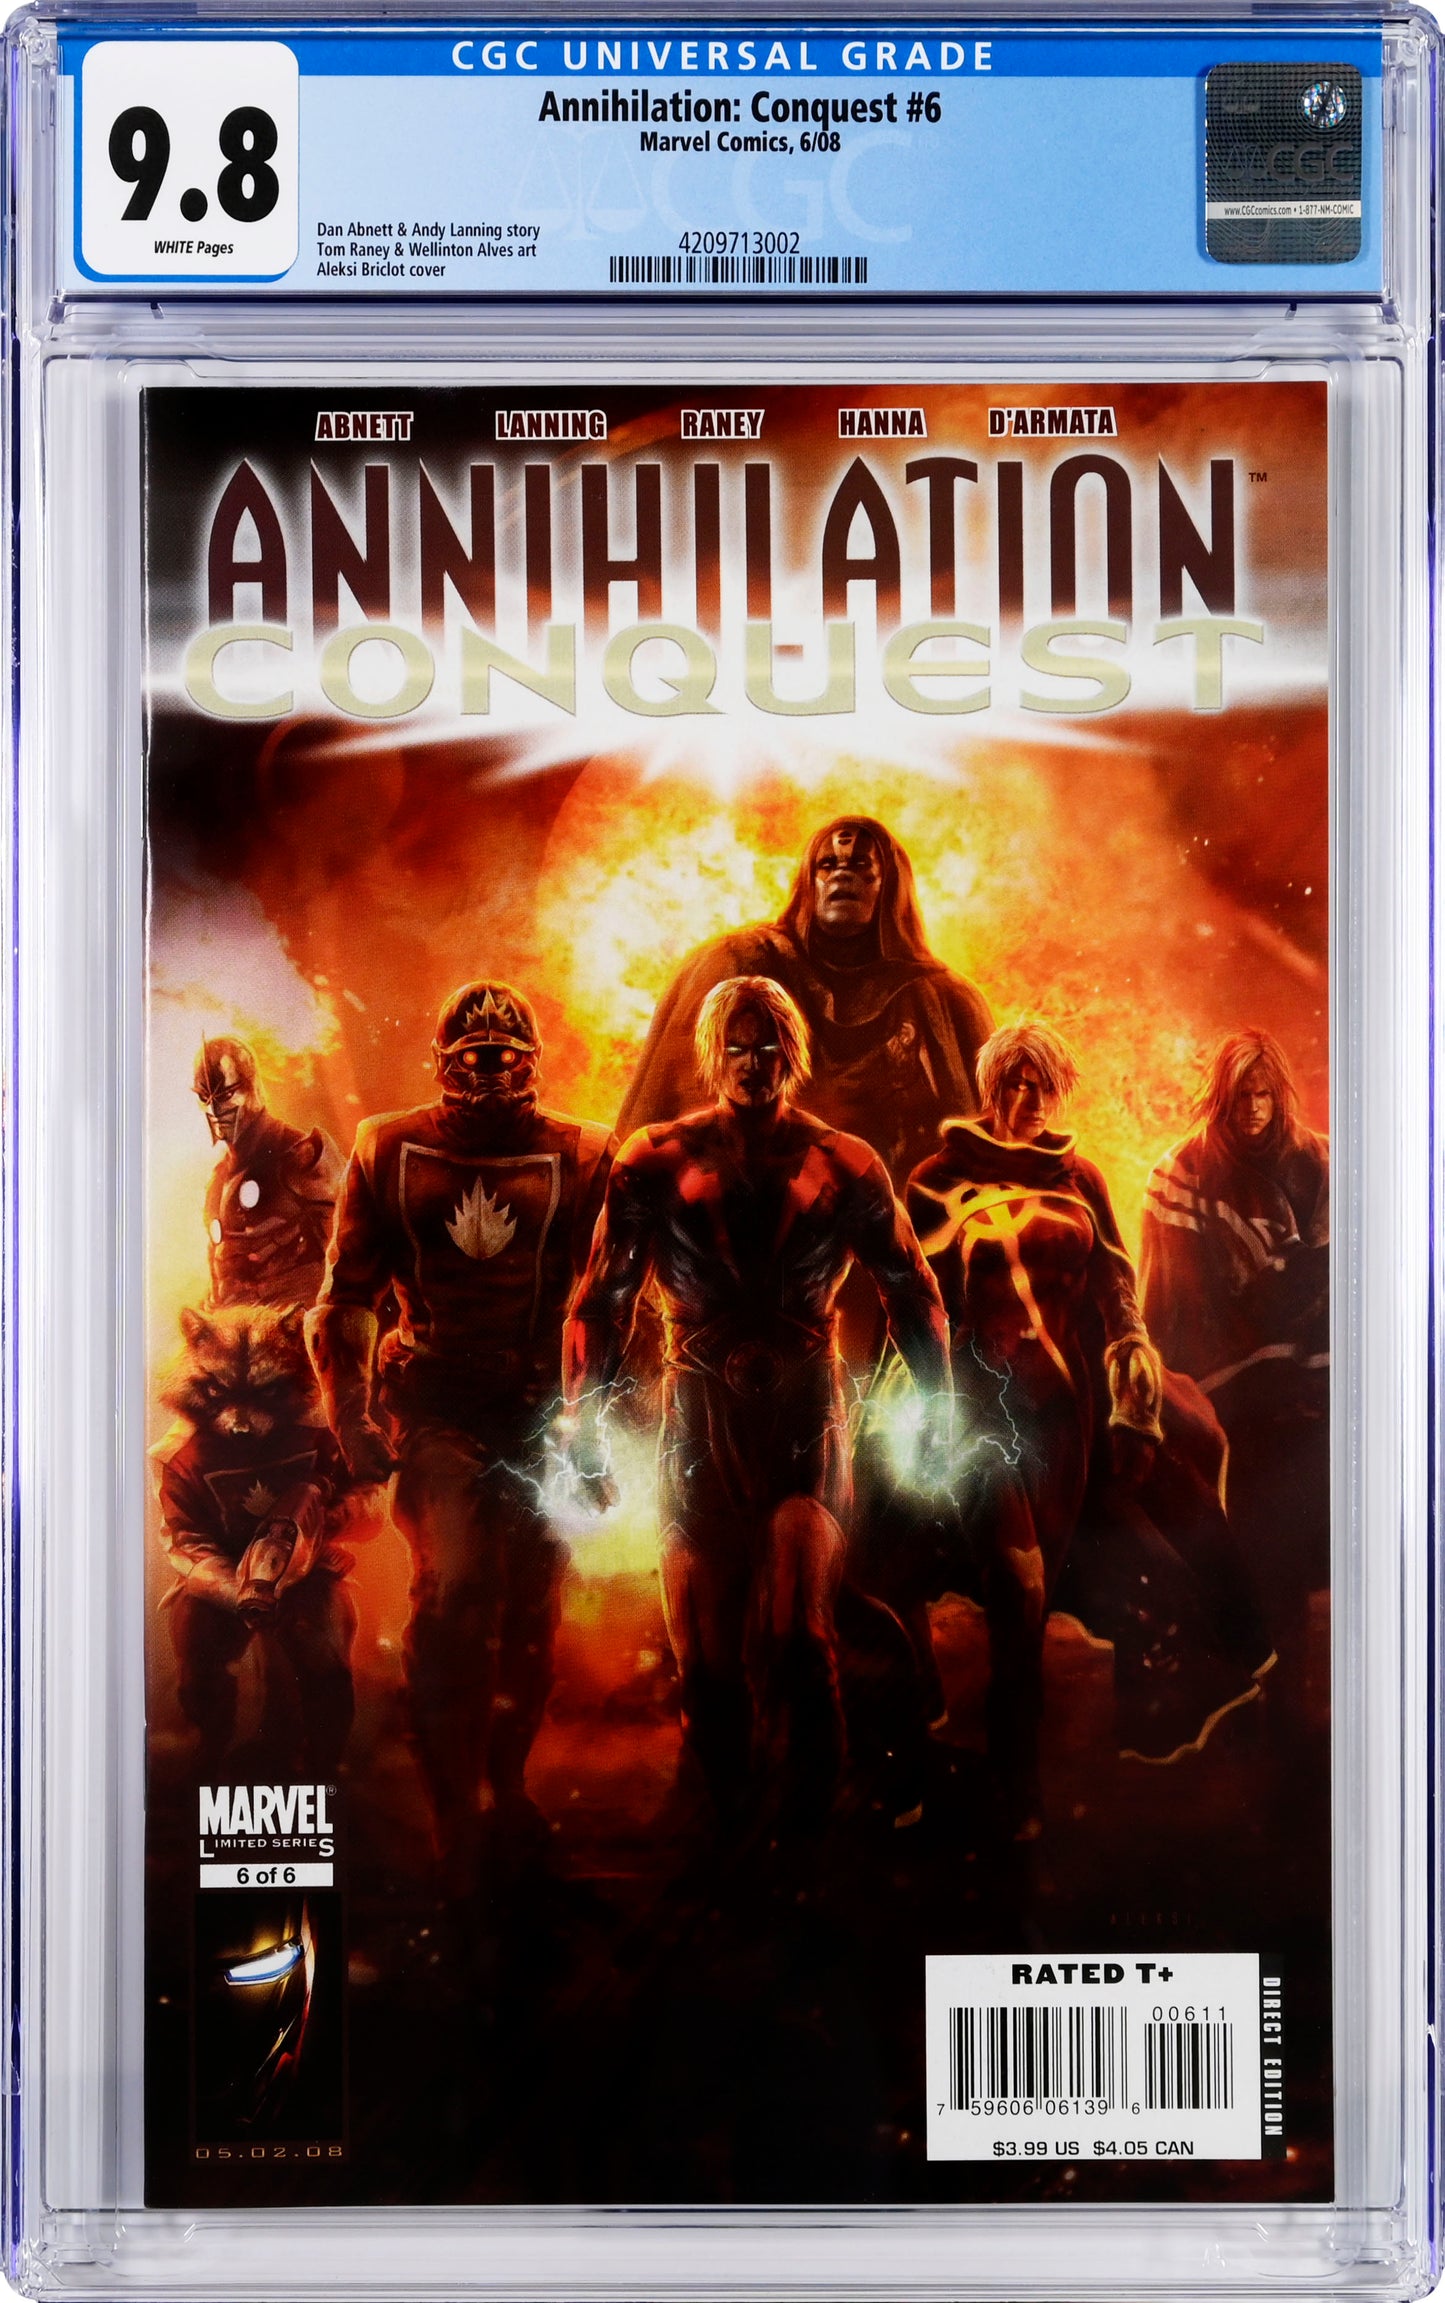 Annihilation Conquest #6 - CGC 9.6 - 1st MCU Guardians of the Galaxy